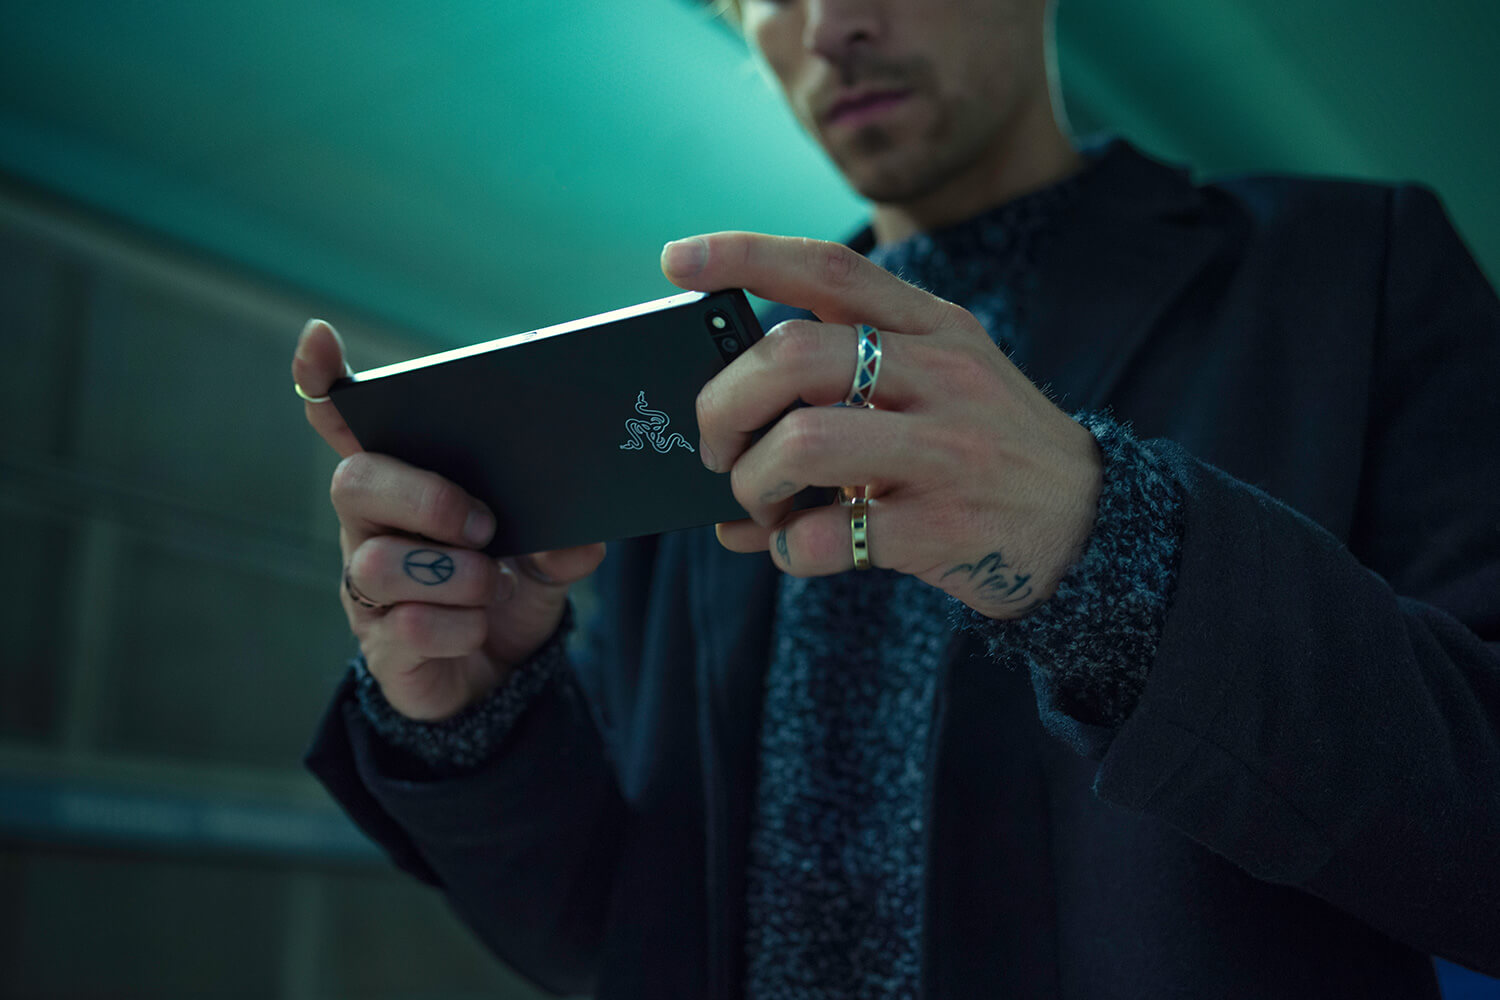 Razer phone announced with Adaptable DIsplay, 8GB RAM 4